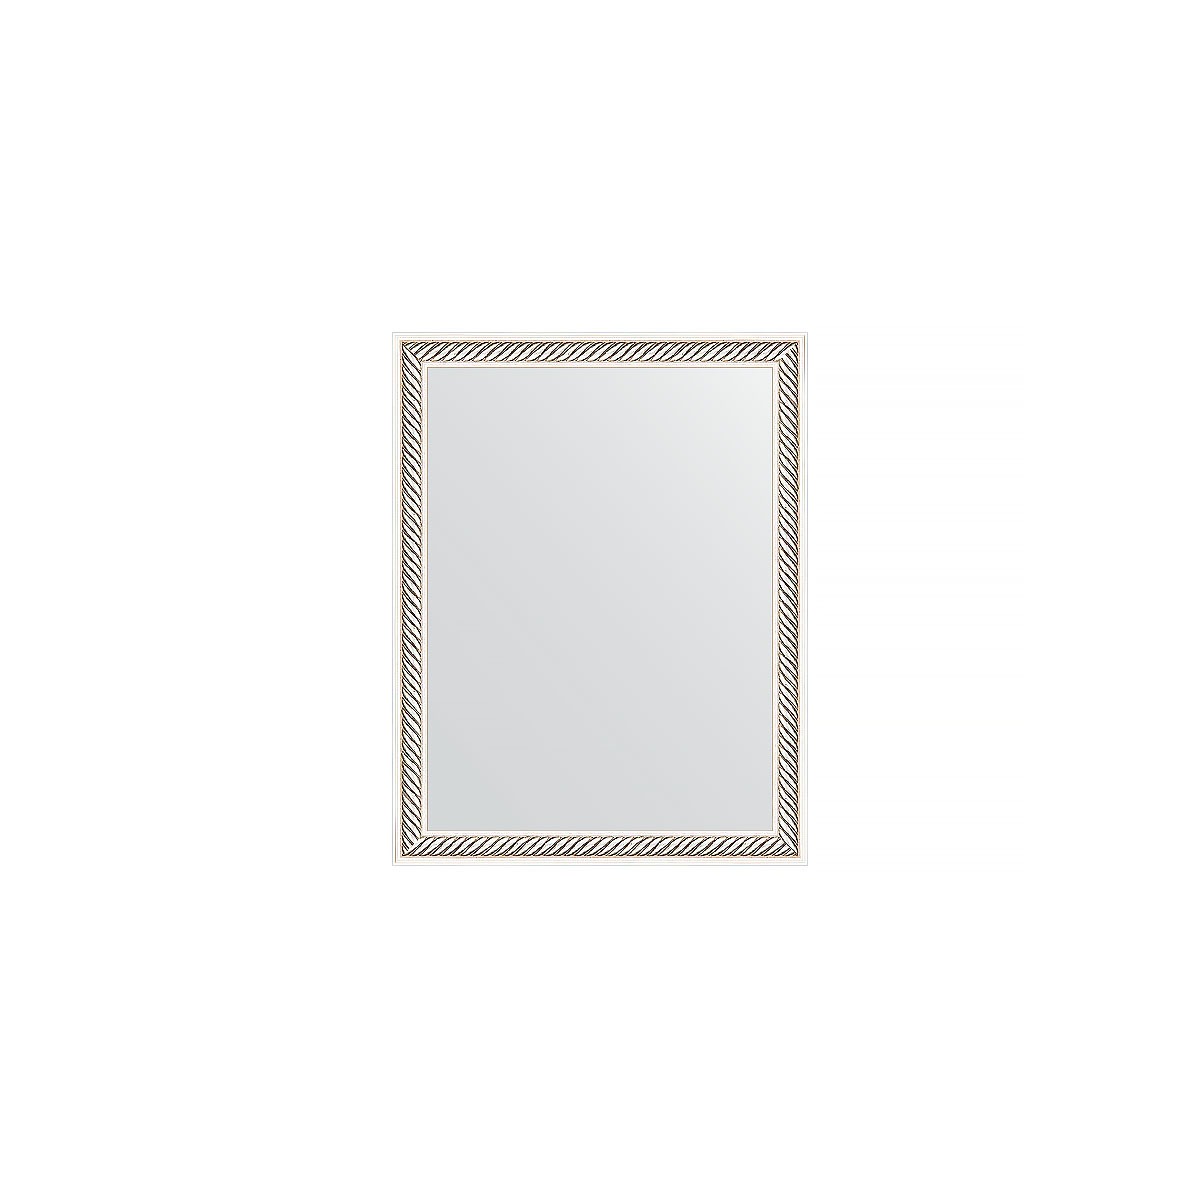 Зеркало в багетной раме Evoform витое серебро 28 мм 35х45 см зеркало с фацетом в багетной раме evoform травленое серебро 95 мм 58х88 см